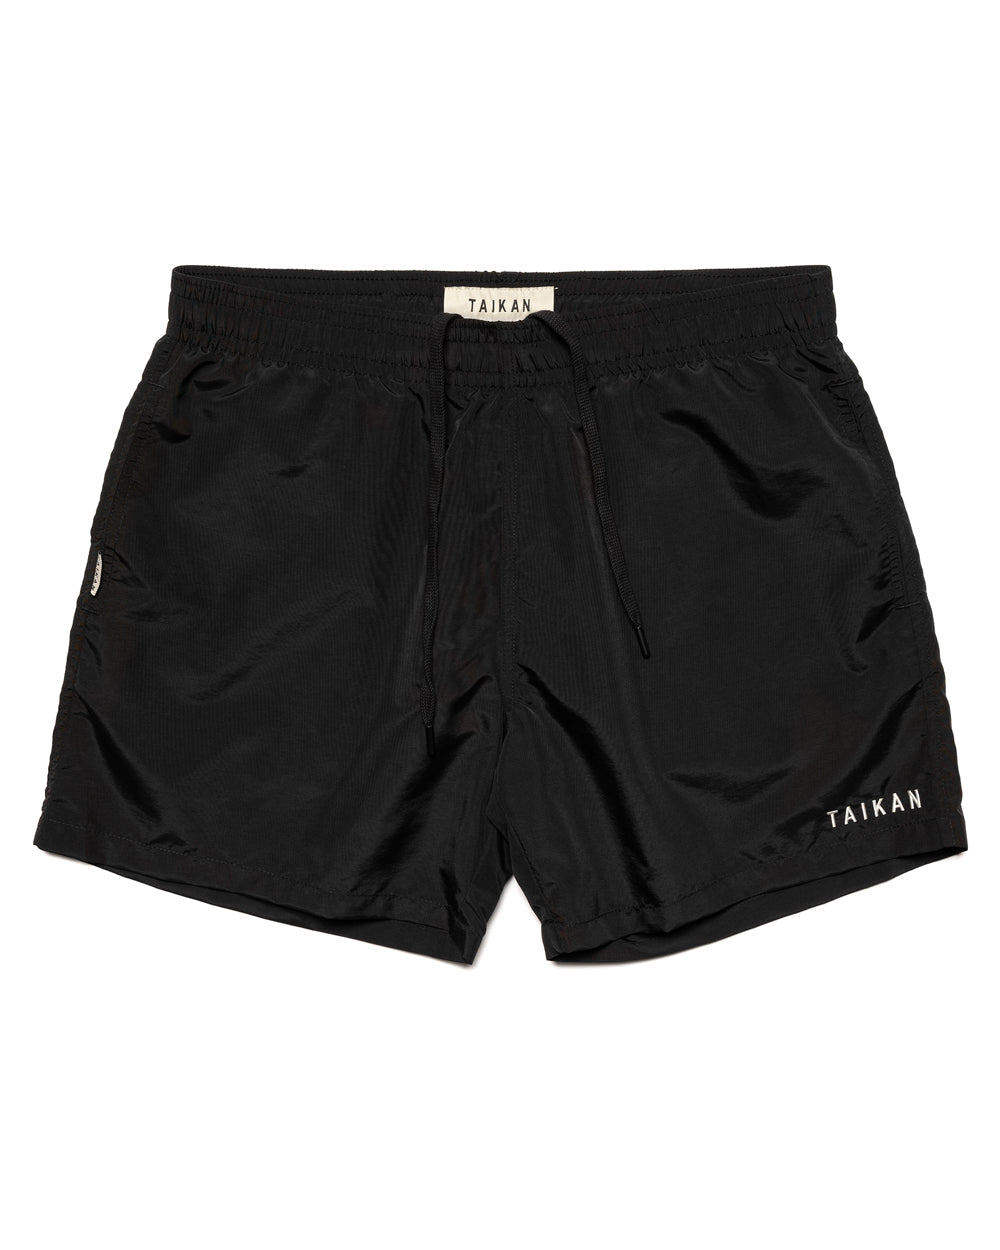 the Taikan Nylon Shorts in Black laying flat on a white backgroun